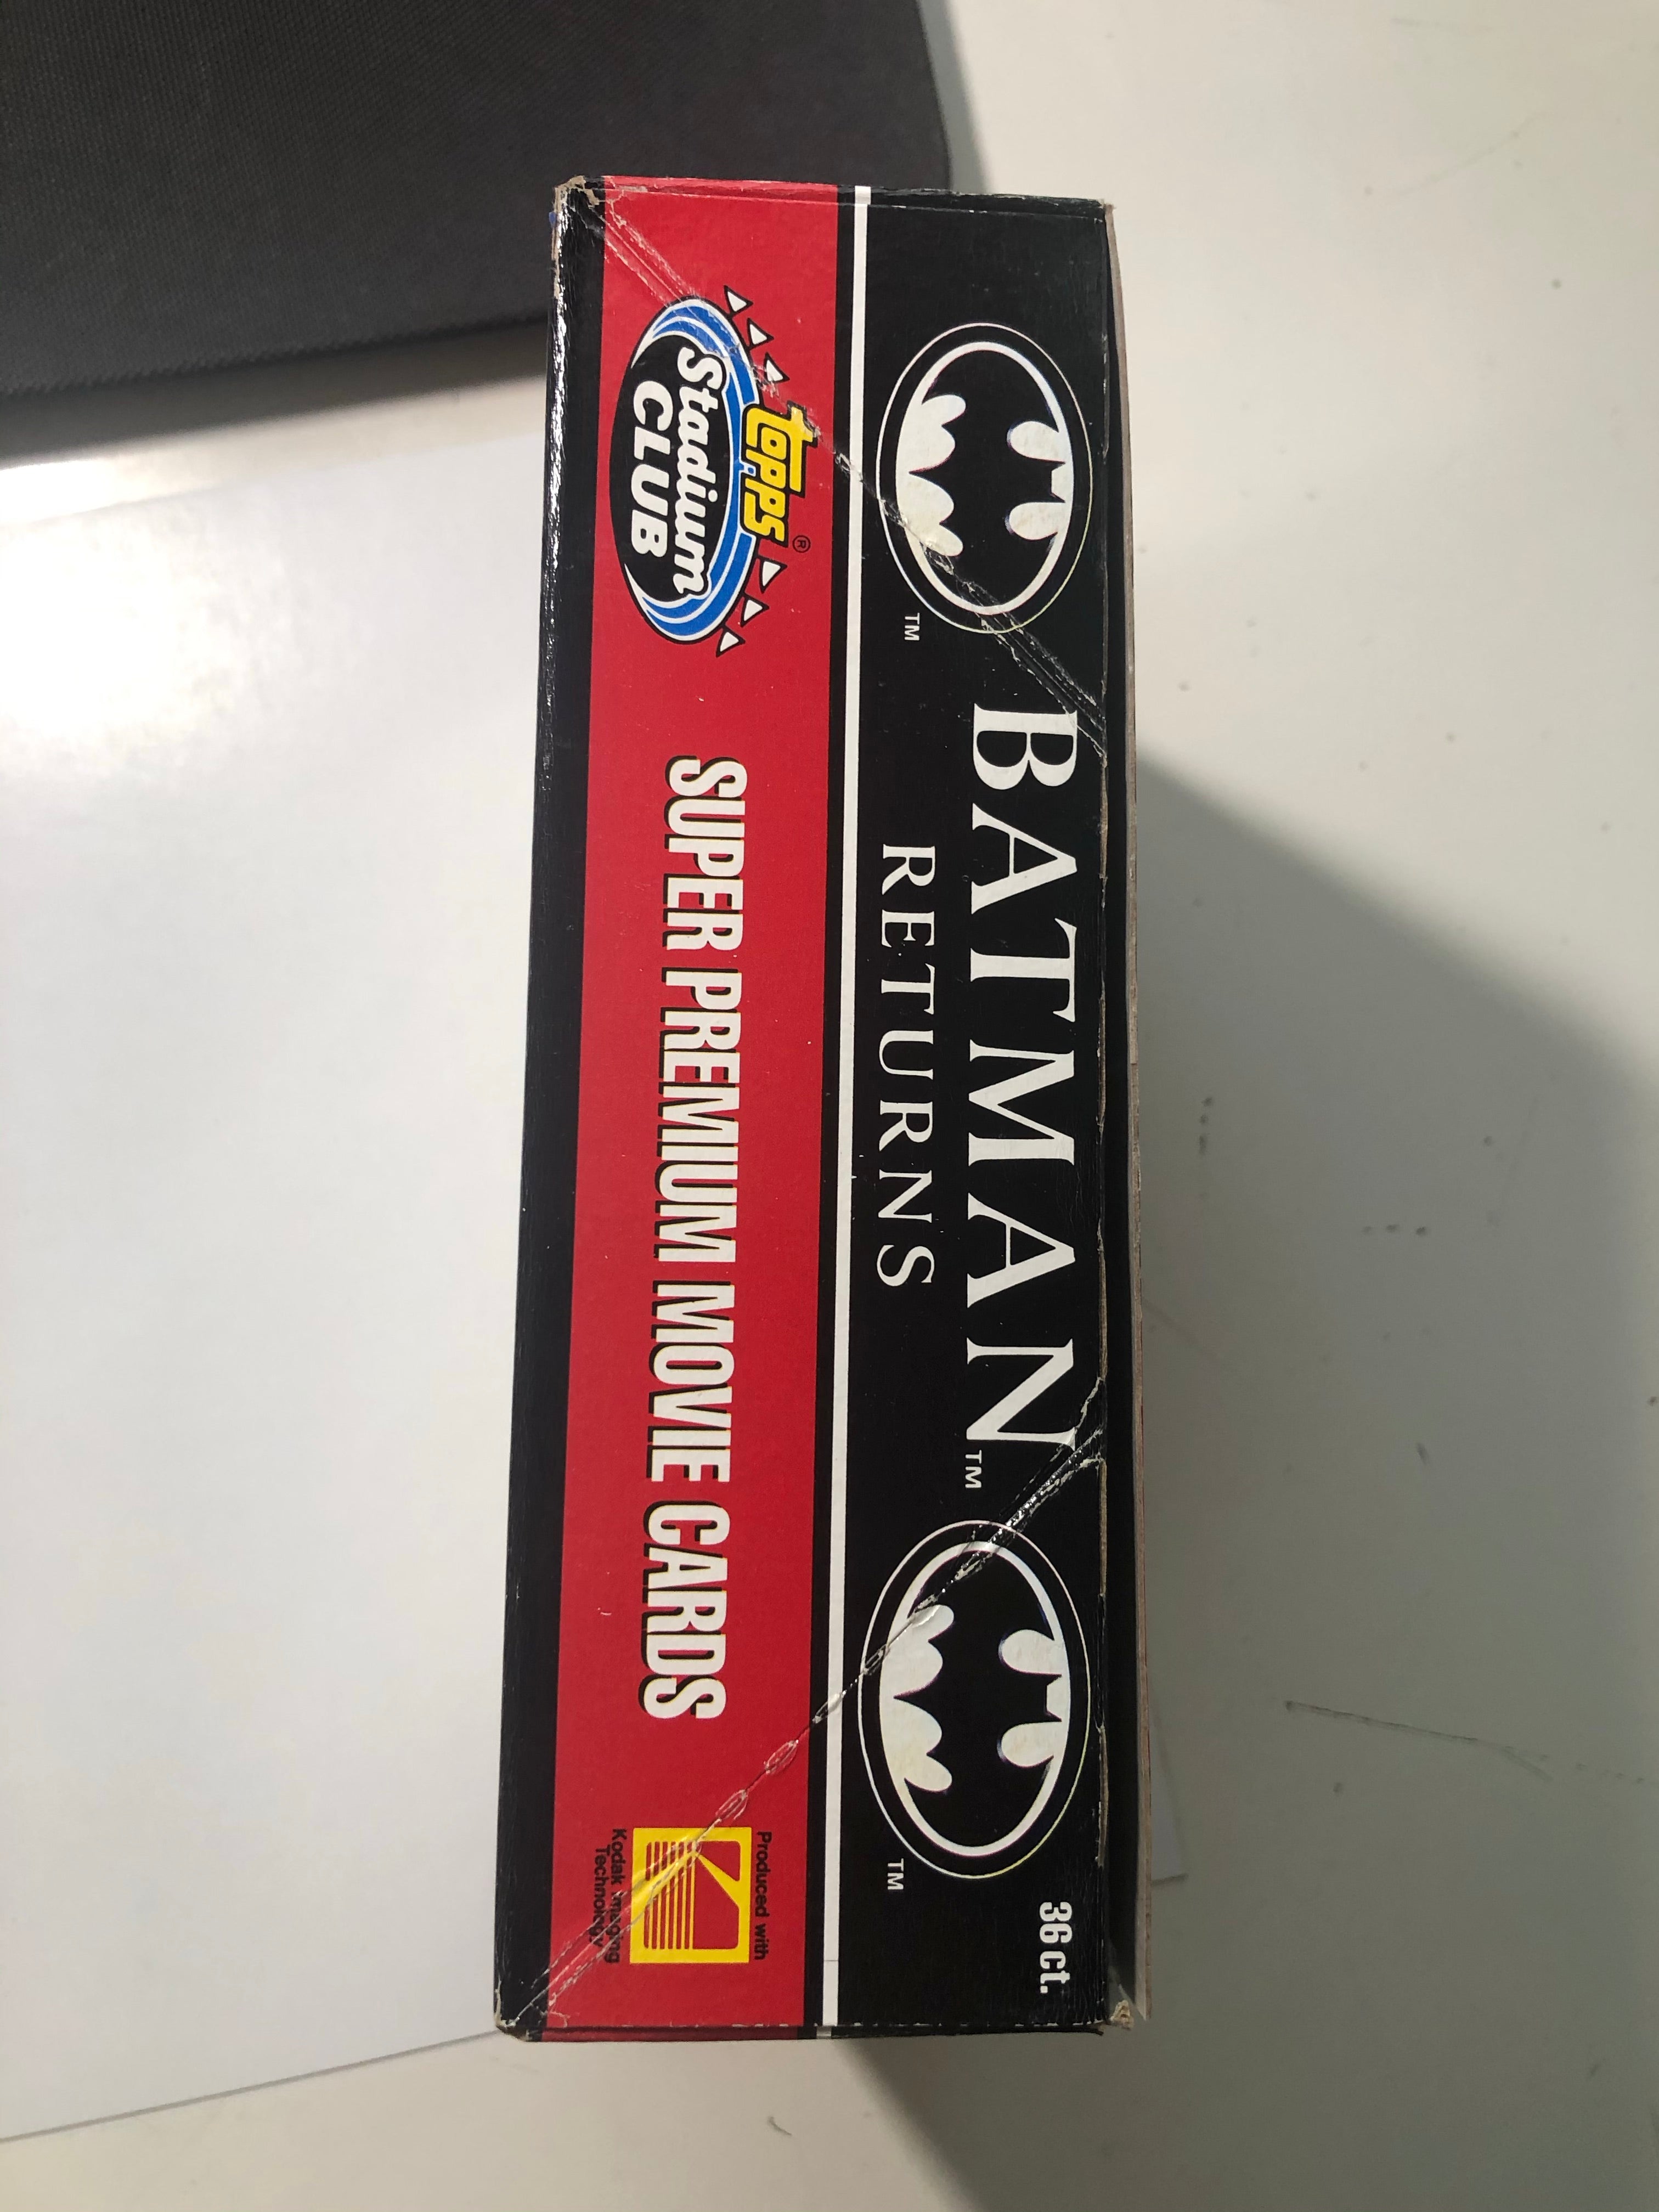 1991 Topps Stadium Club Batman Returns movie cards 36 packs box